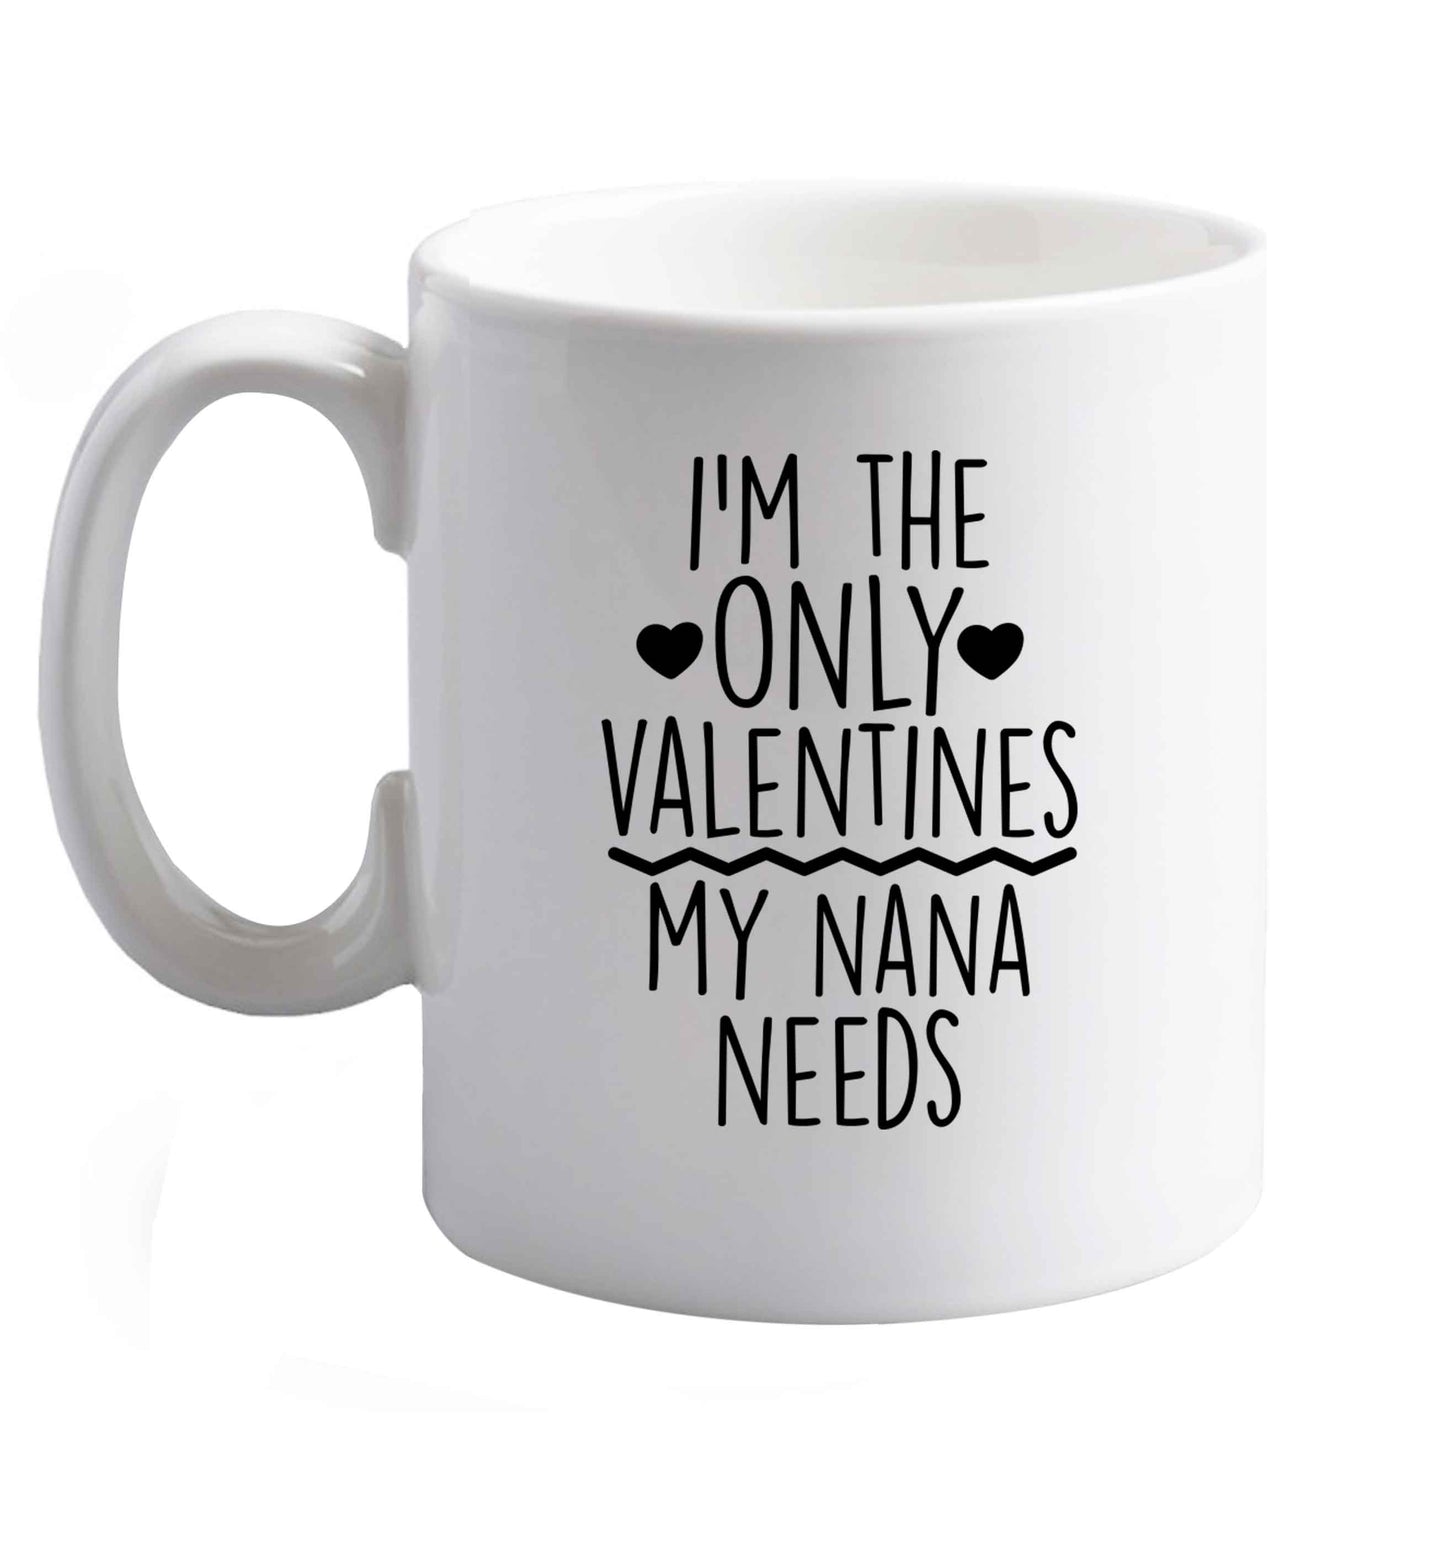 10 oz I'm the only valentines my nana needs ceramic mug right handed